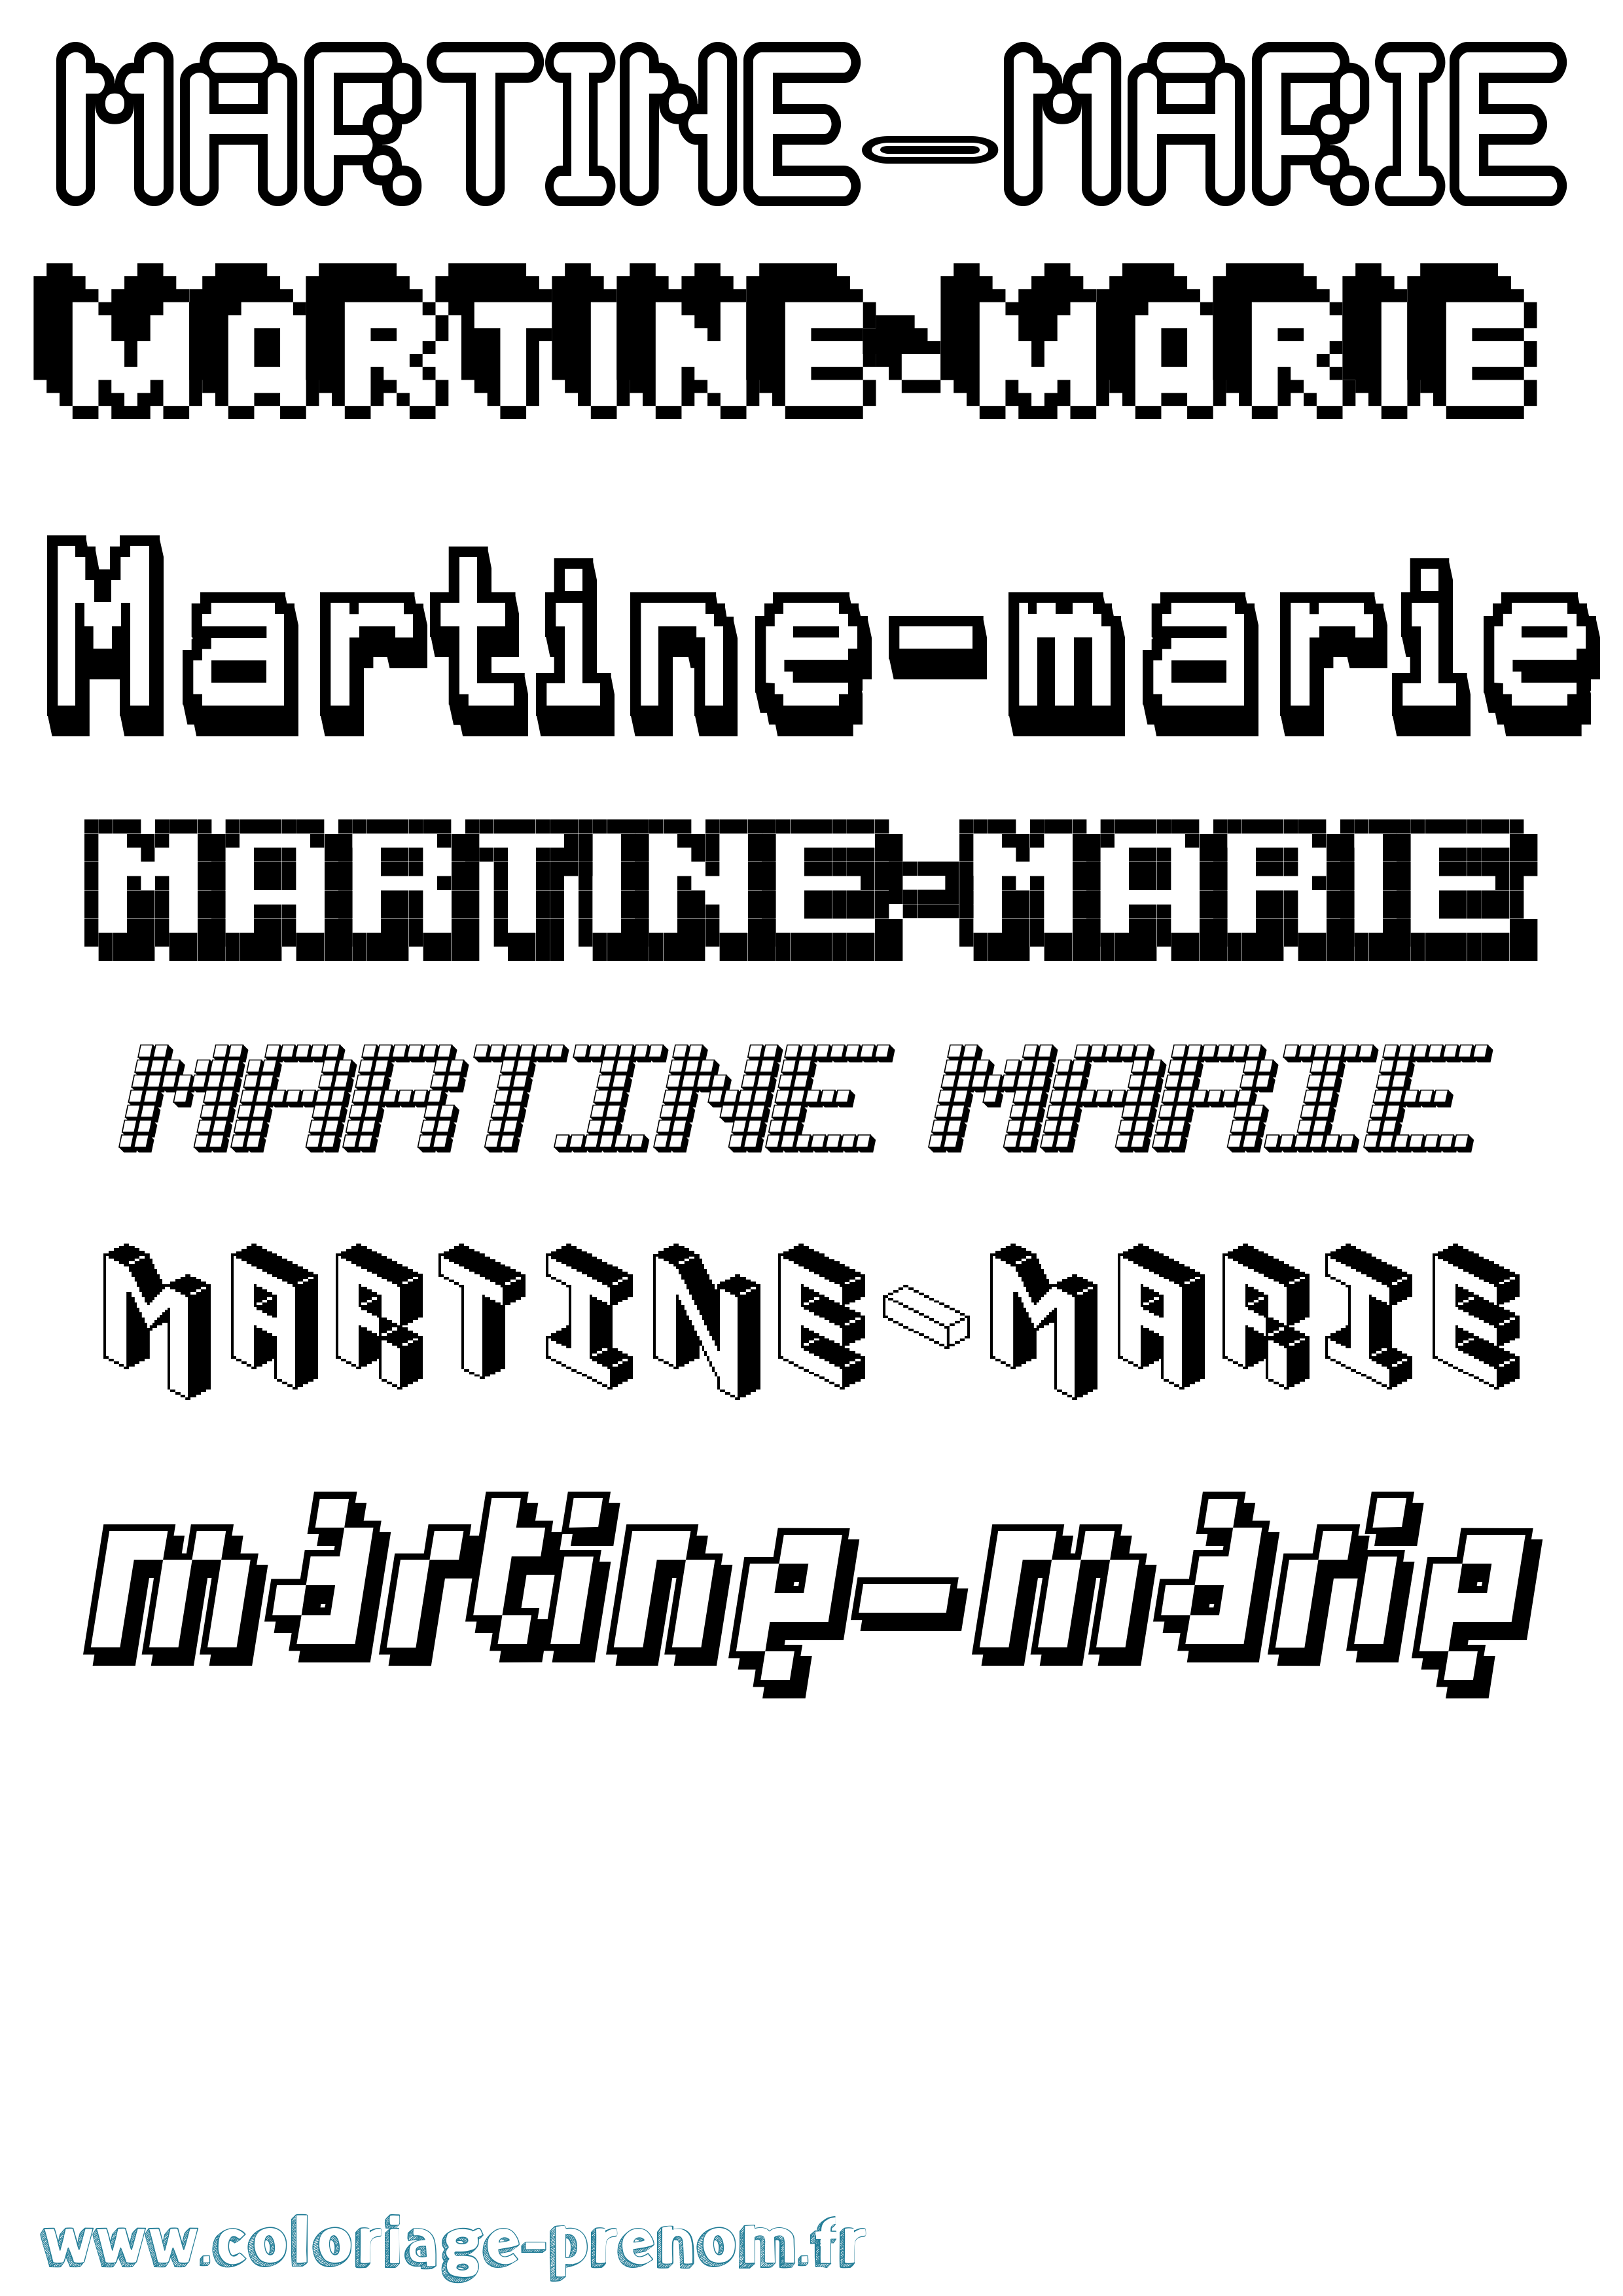 Coloriage prénom Martine-Marie Pixel